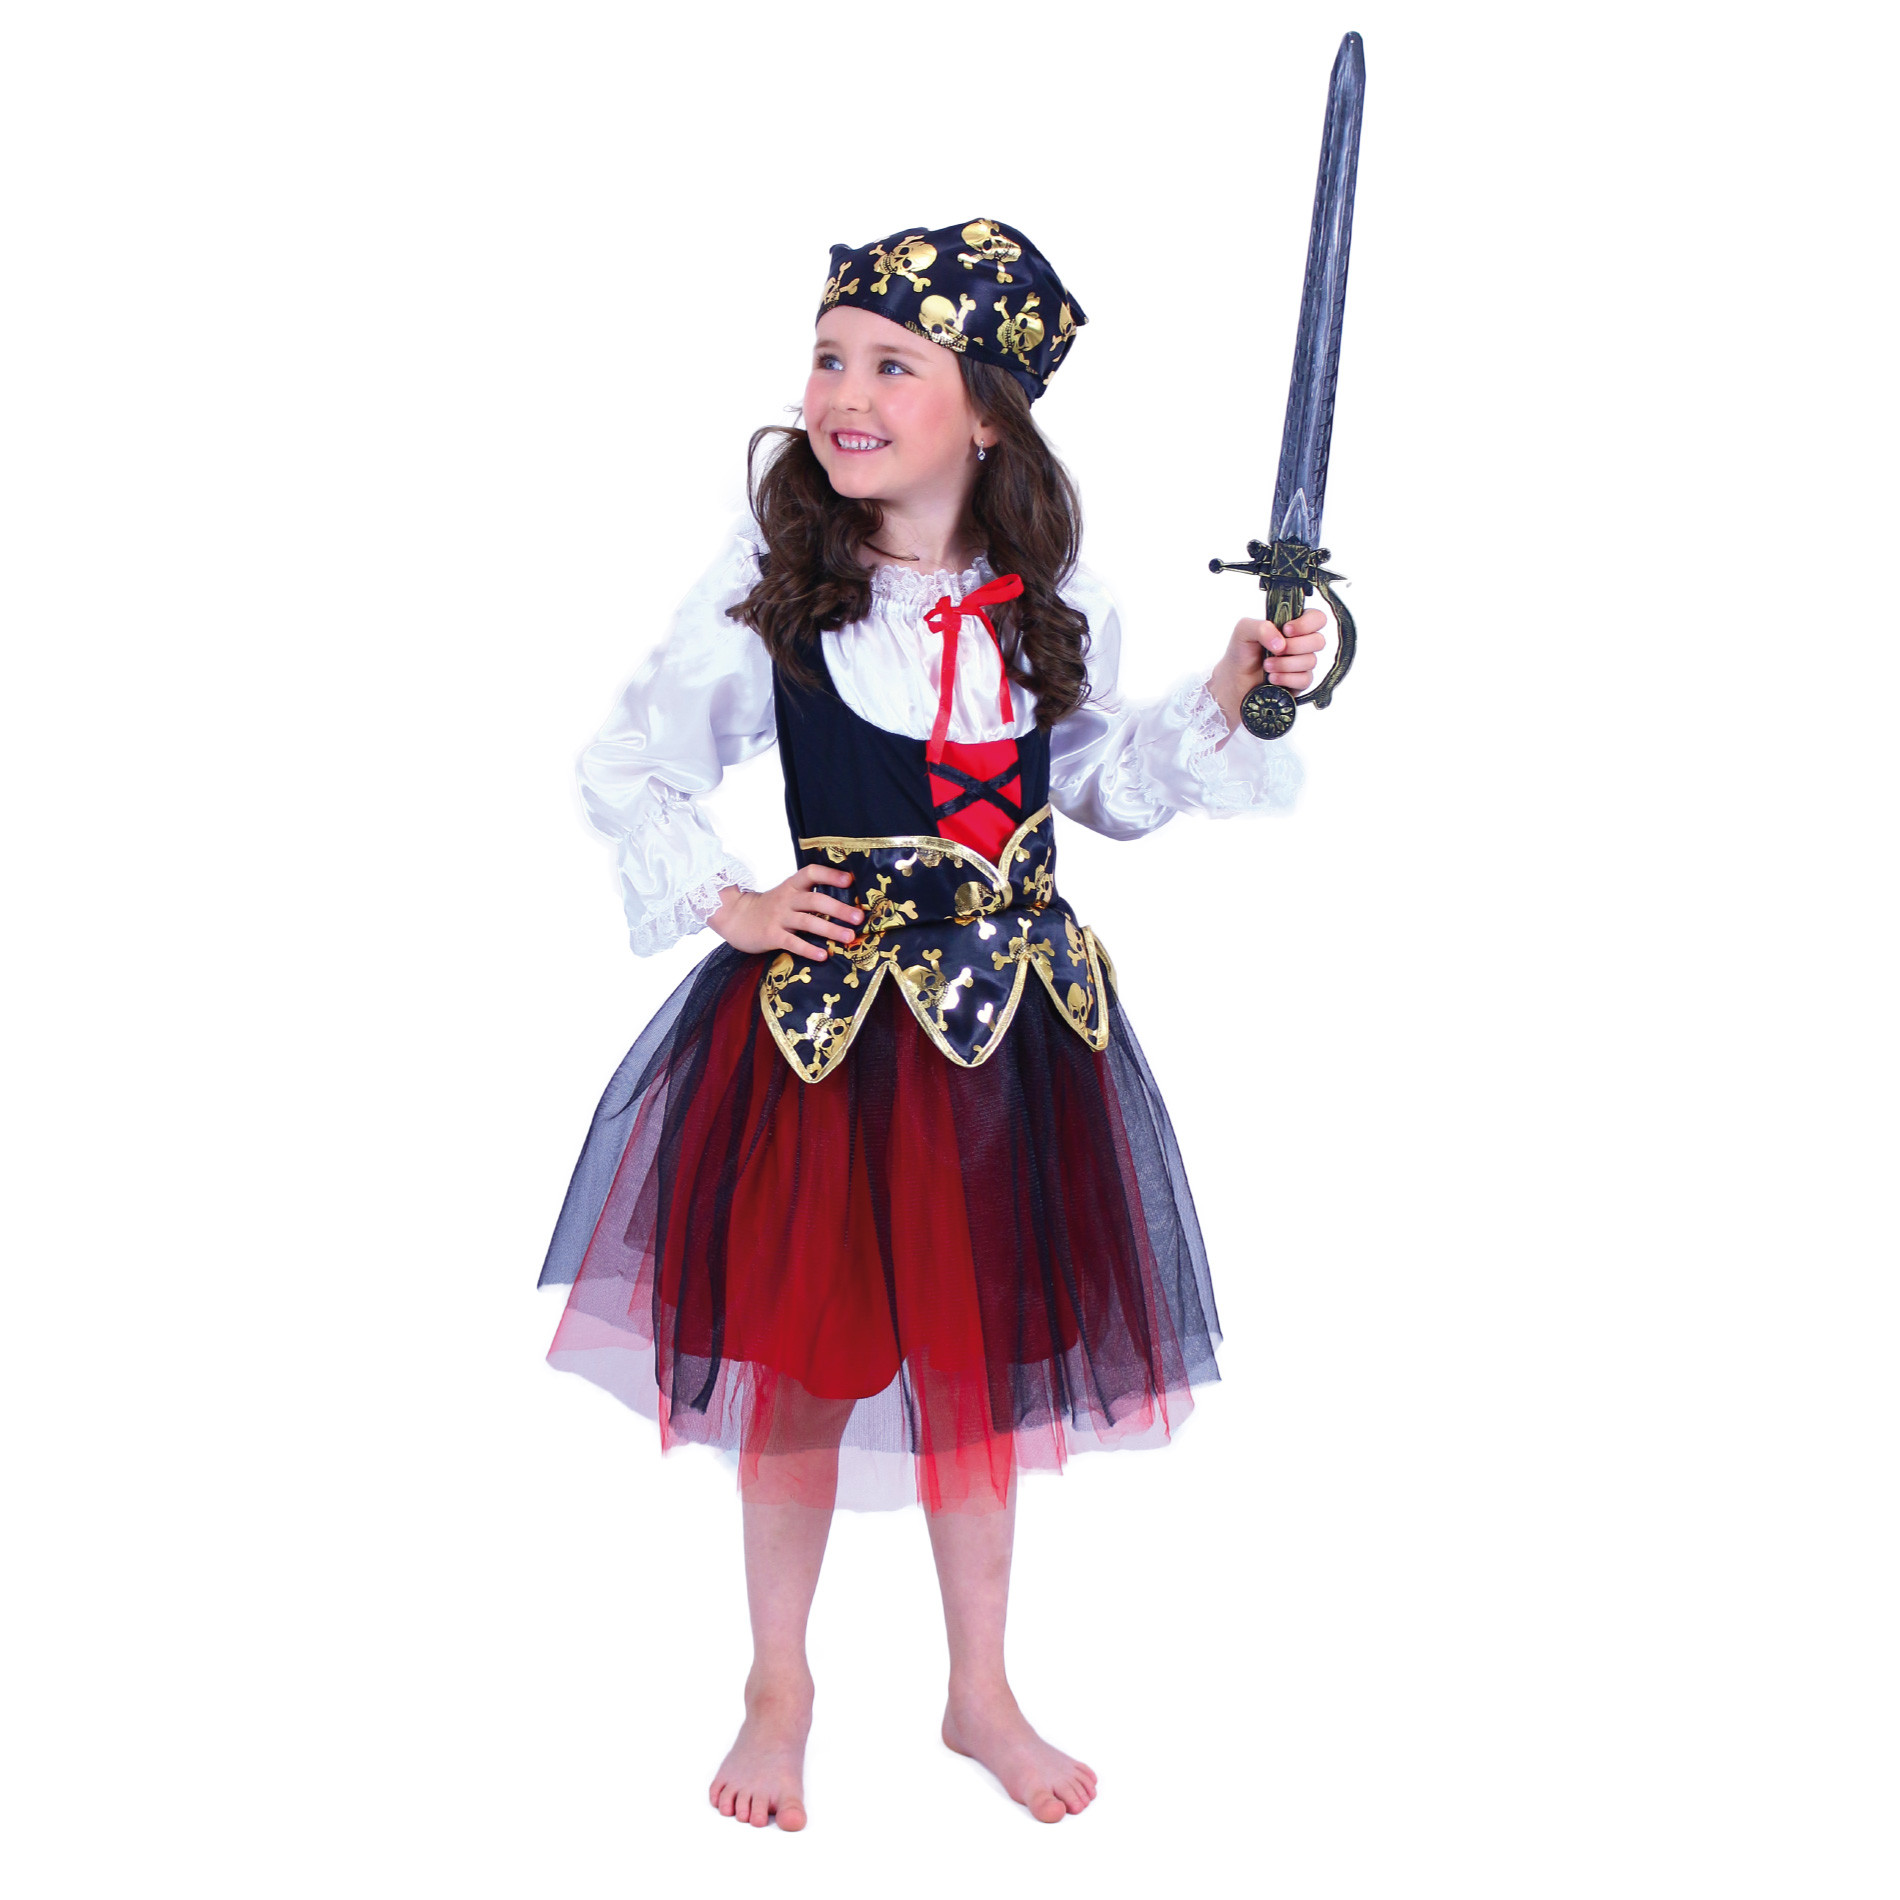 Children costume - Pirate (M)